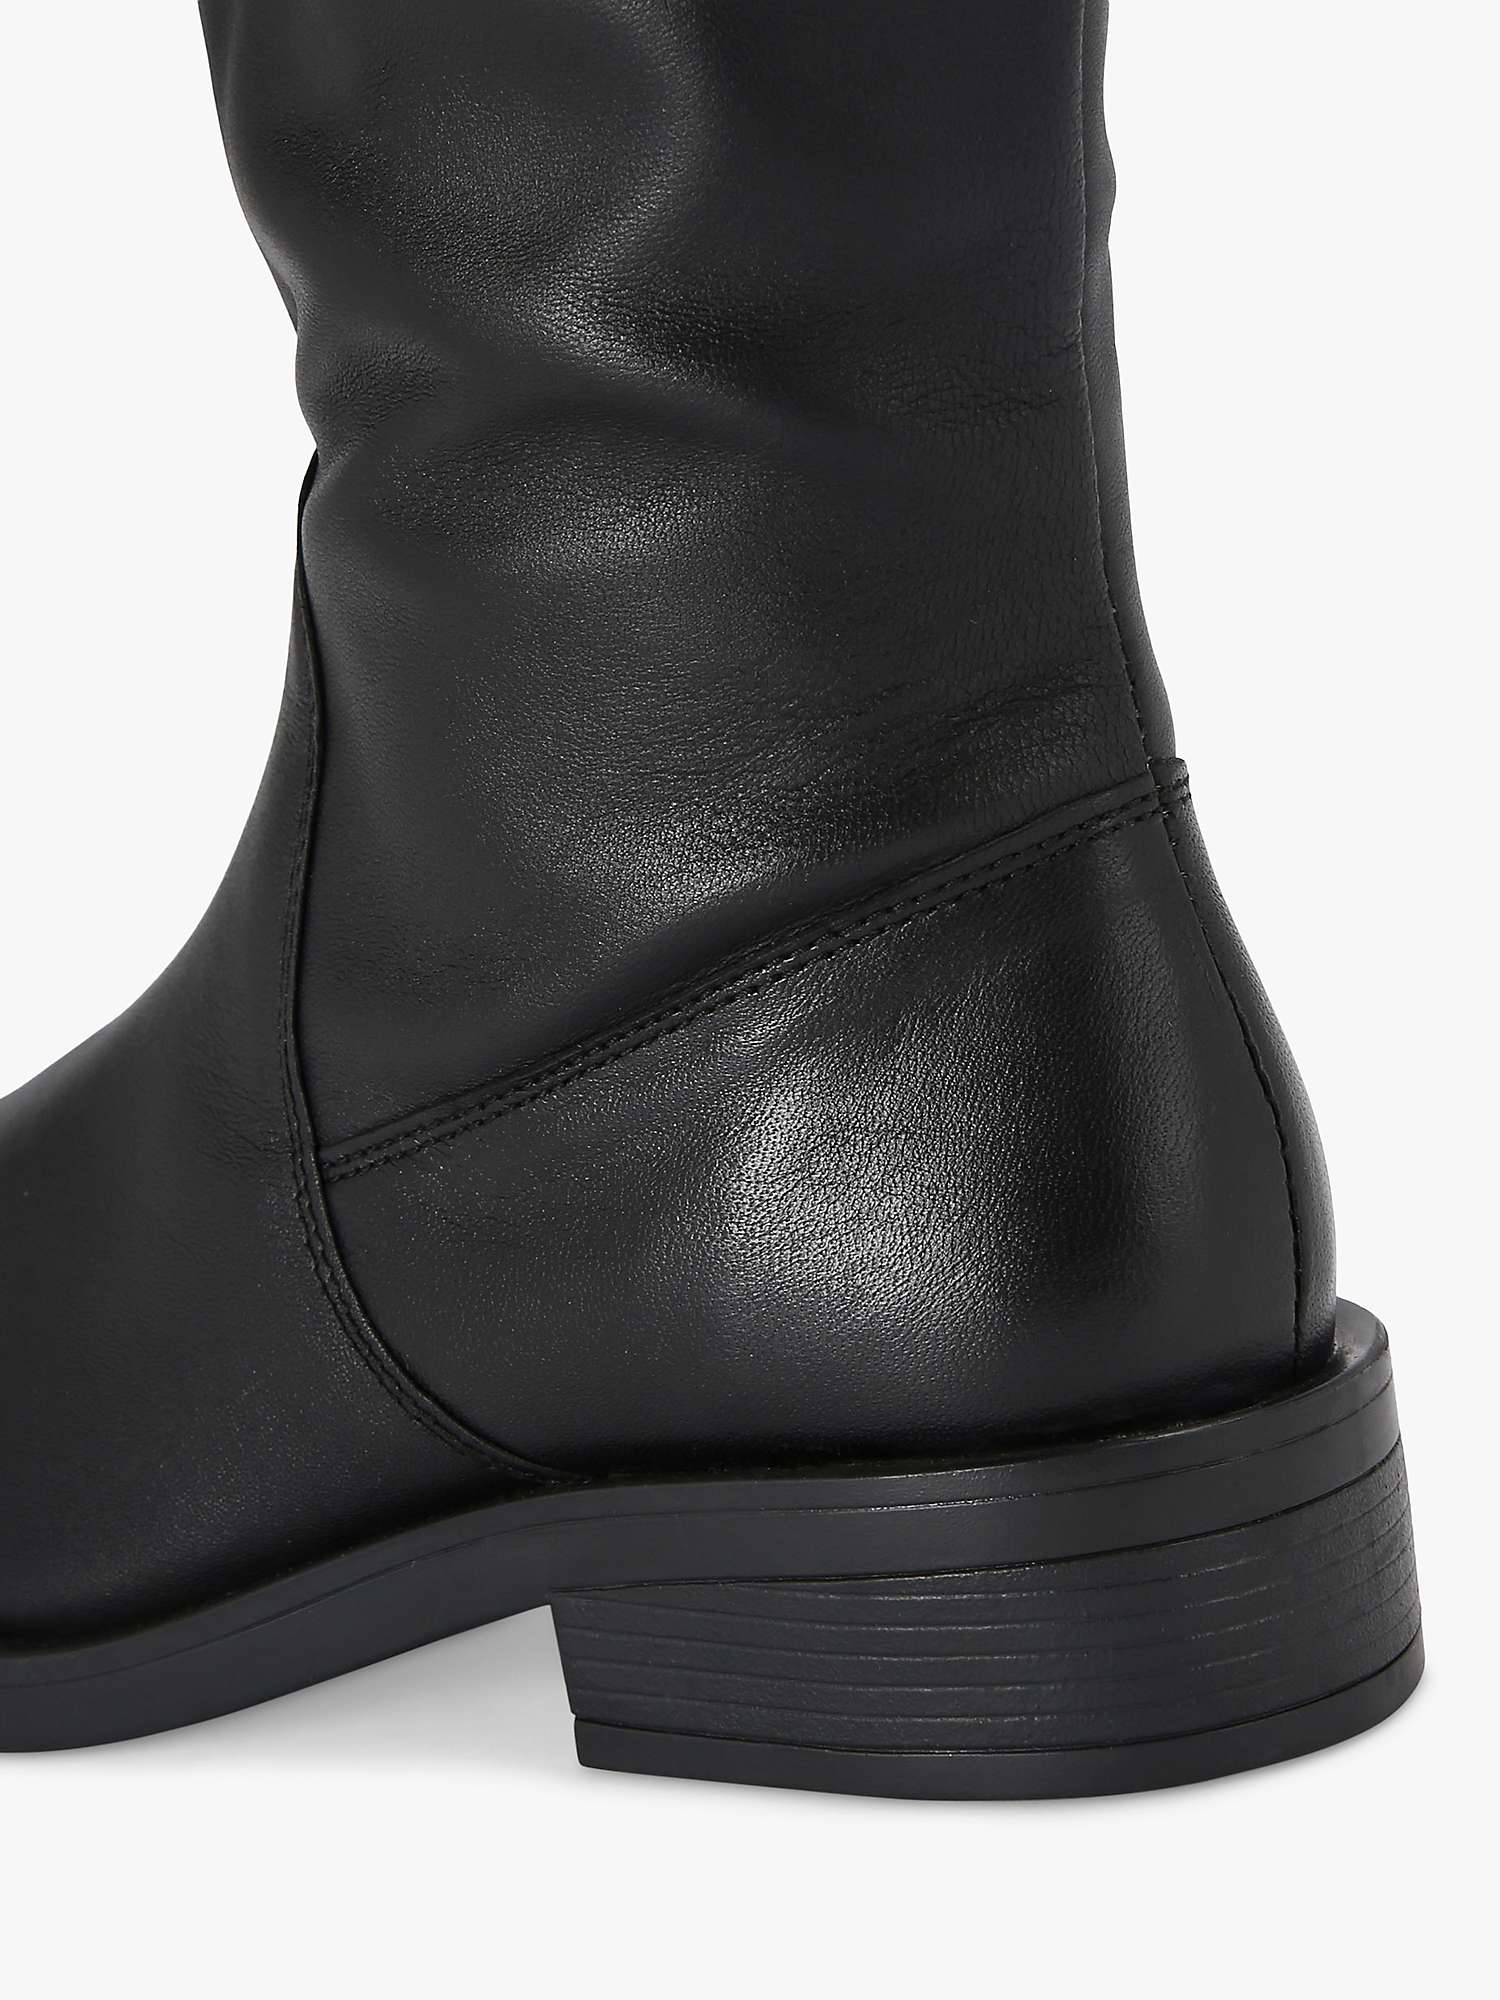 Buy Carvela Parlour Leather Calf Boots Online at johnlewis.com